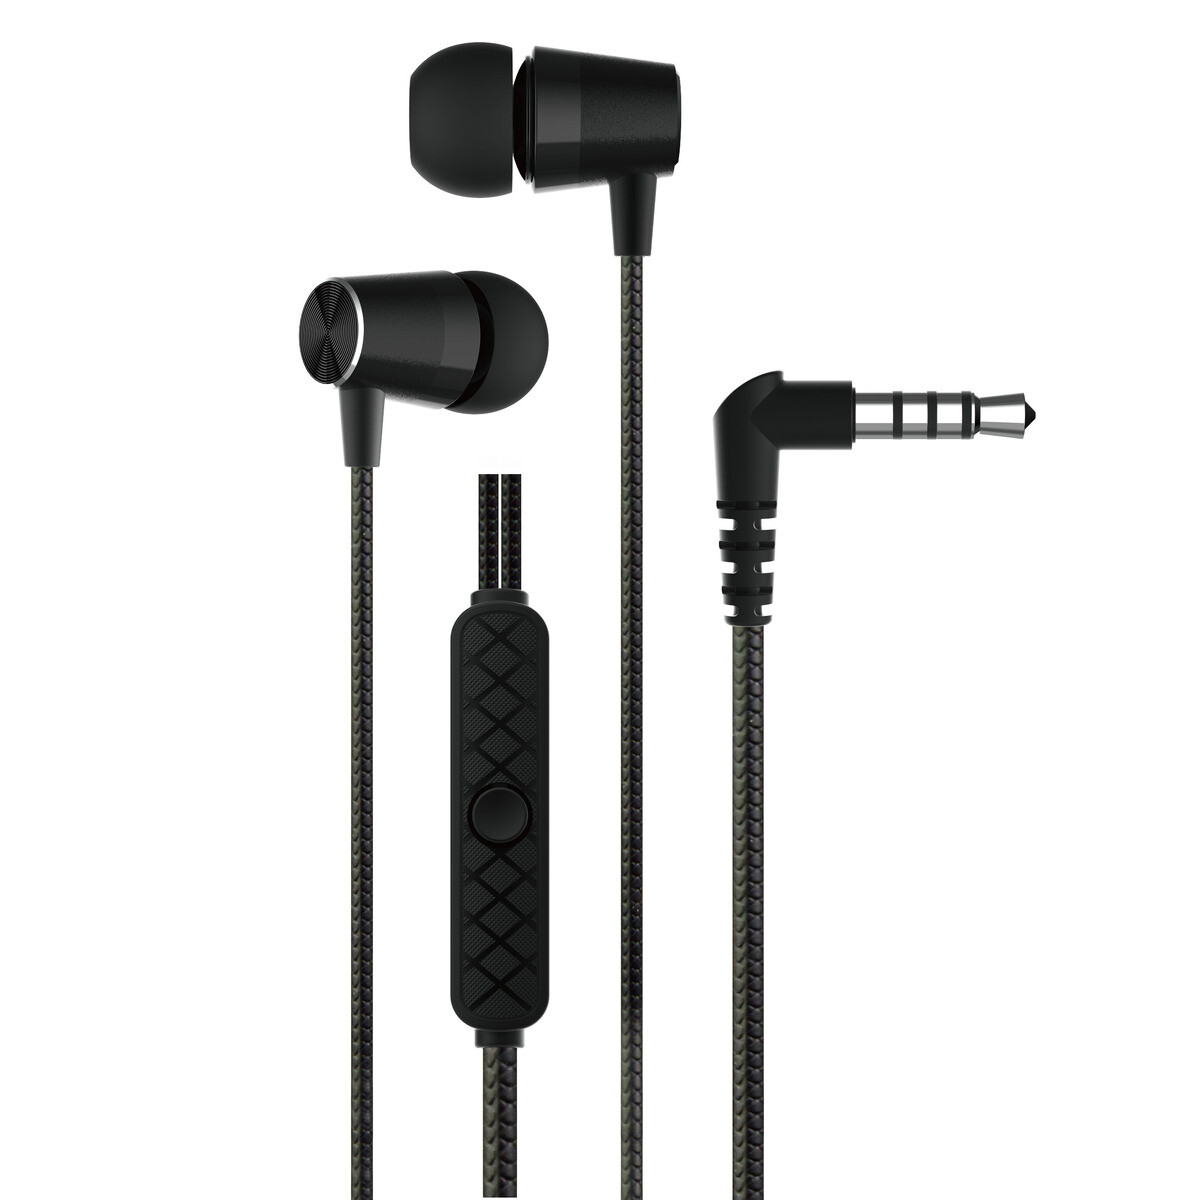 Devia metal earphone kintone seires 3.5mm - Black 